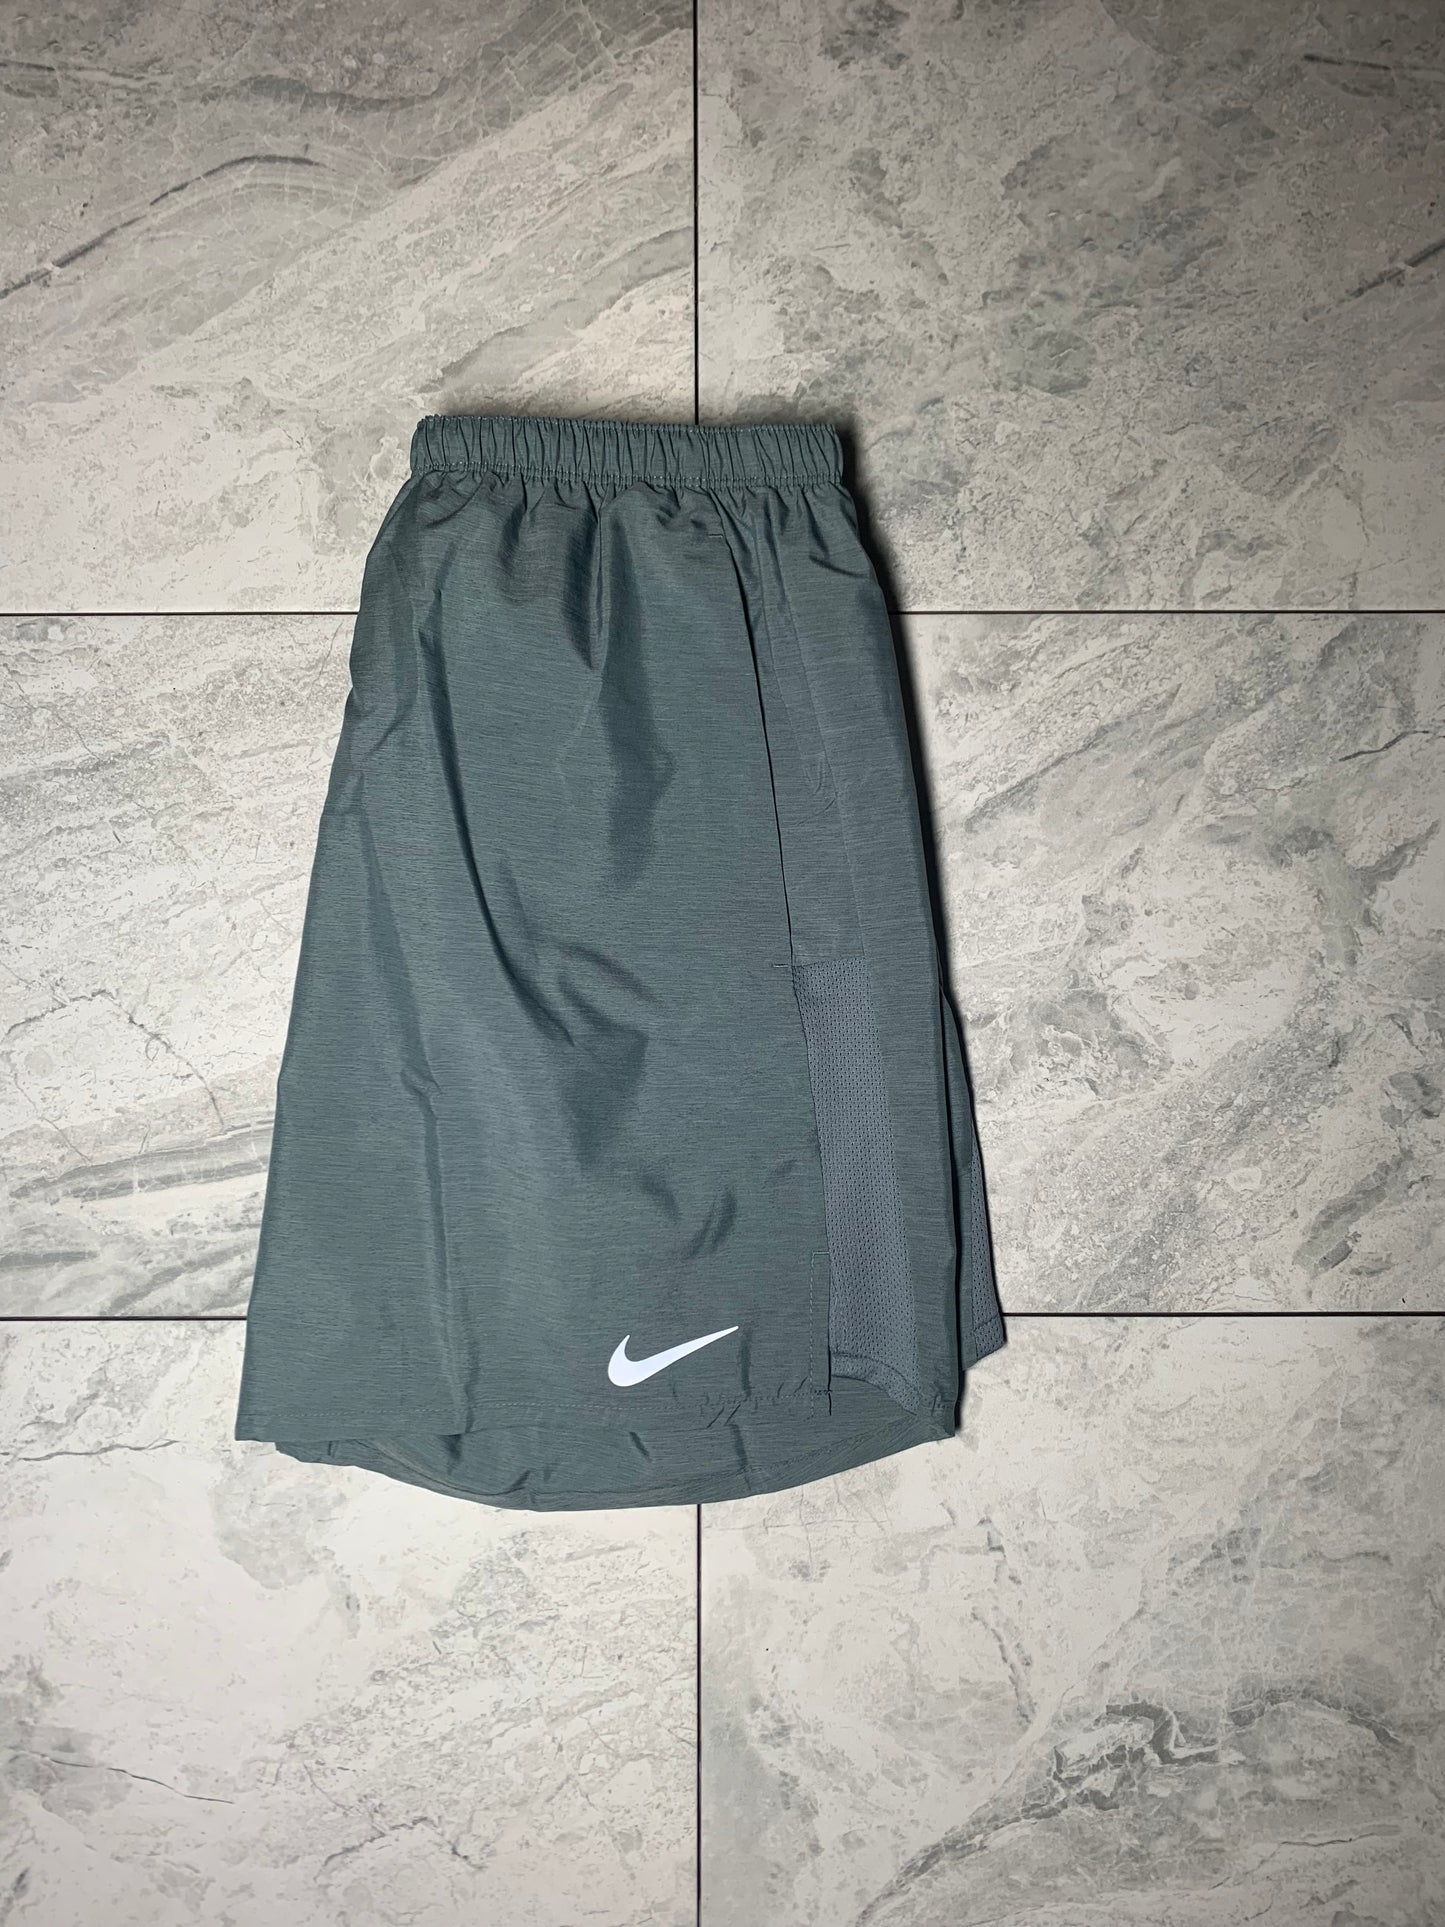 Nike challenger shorts 7”